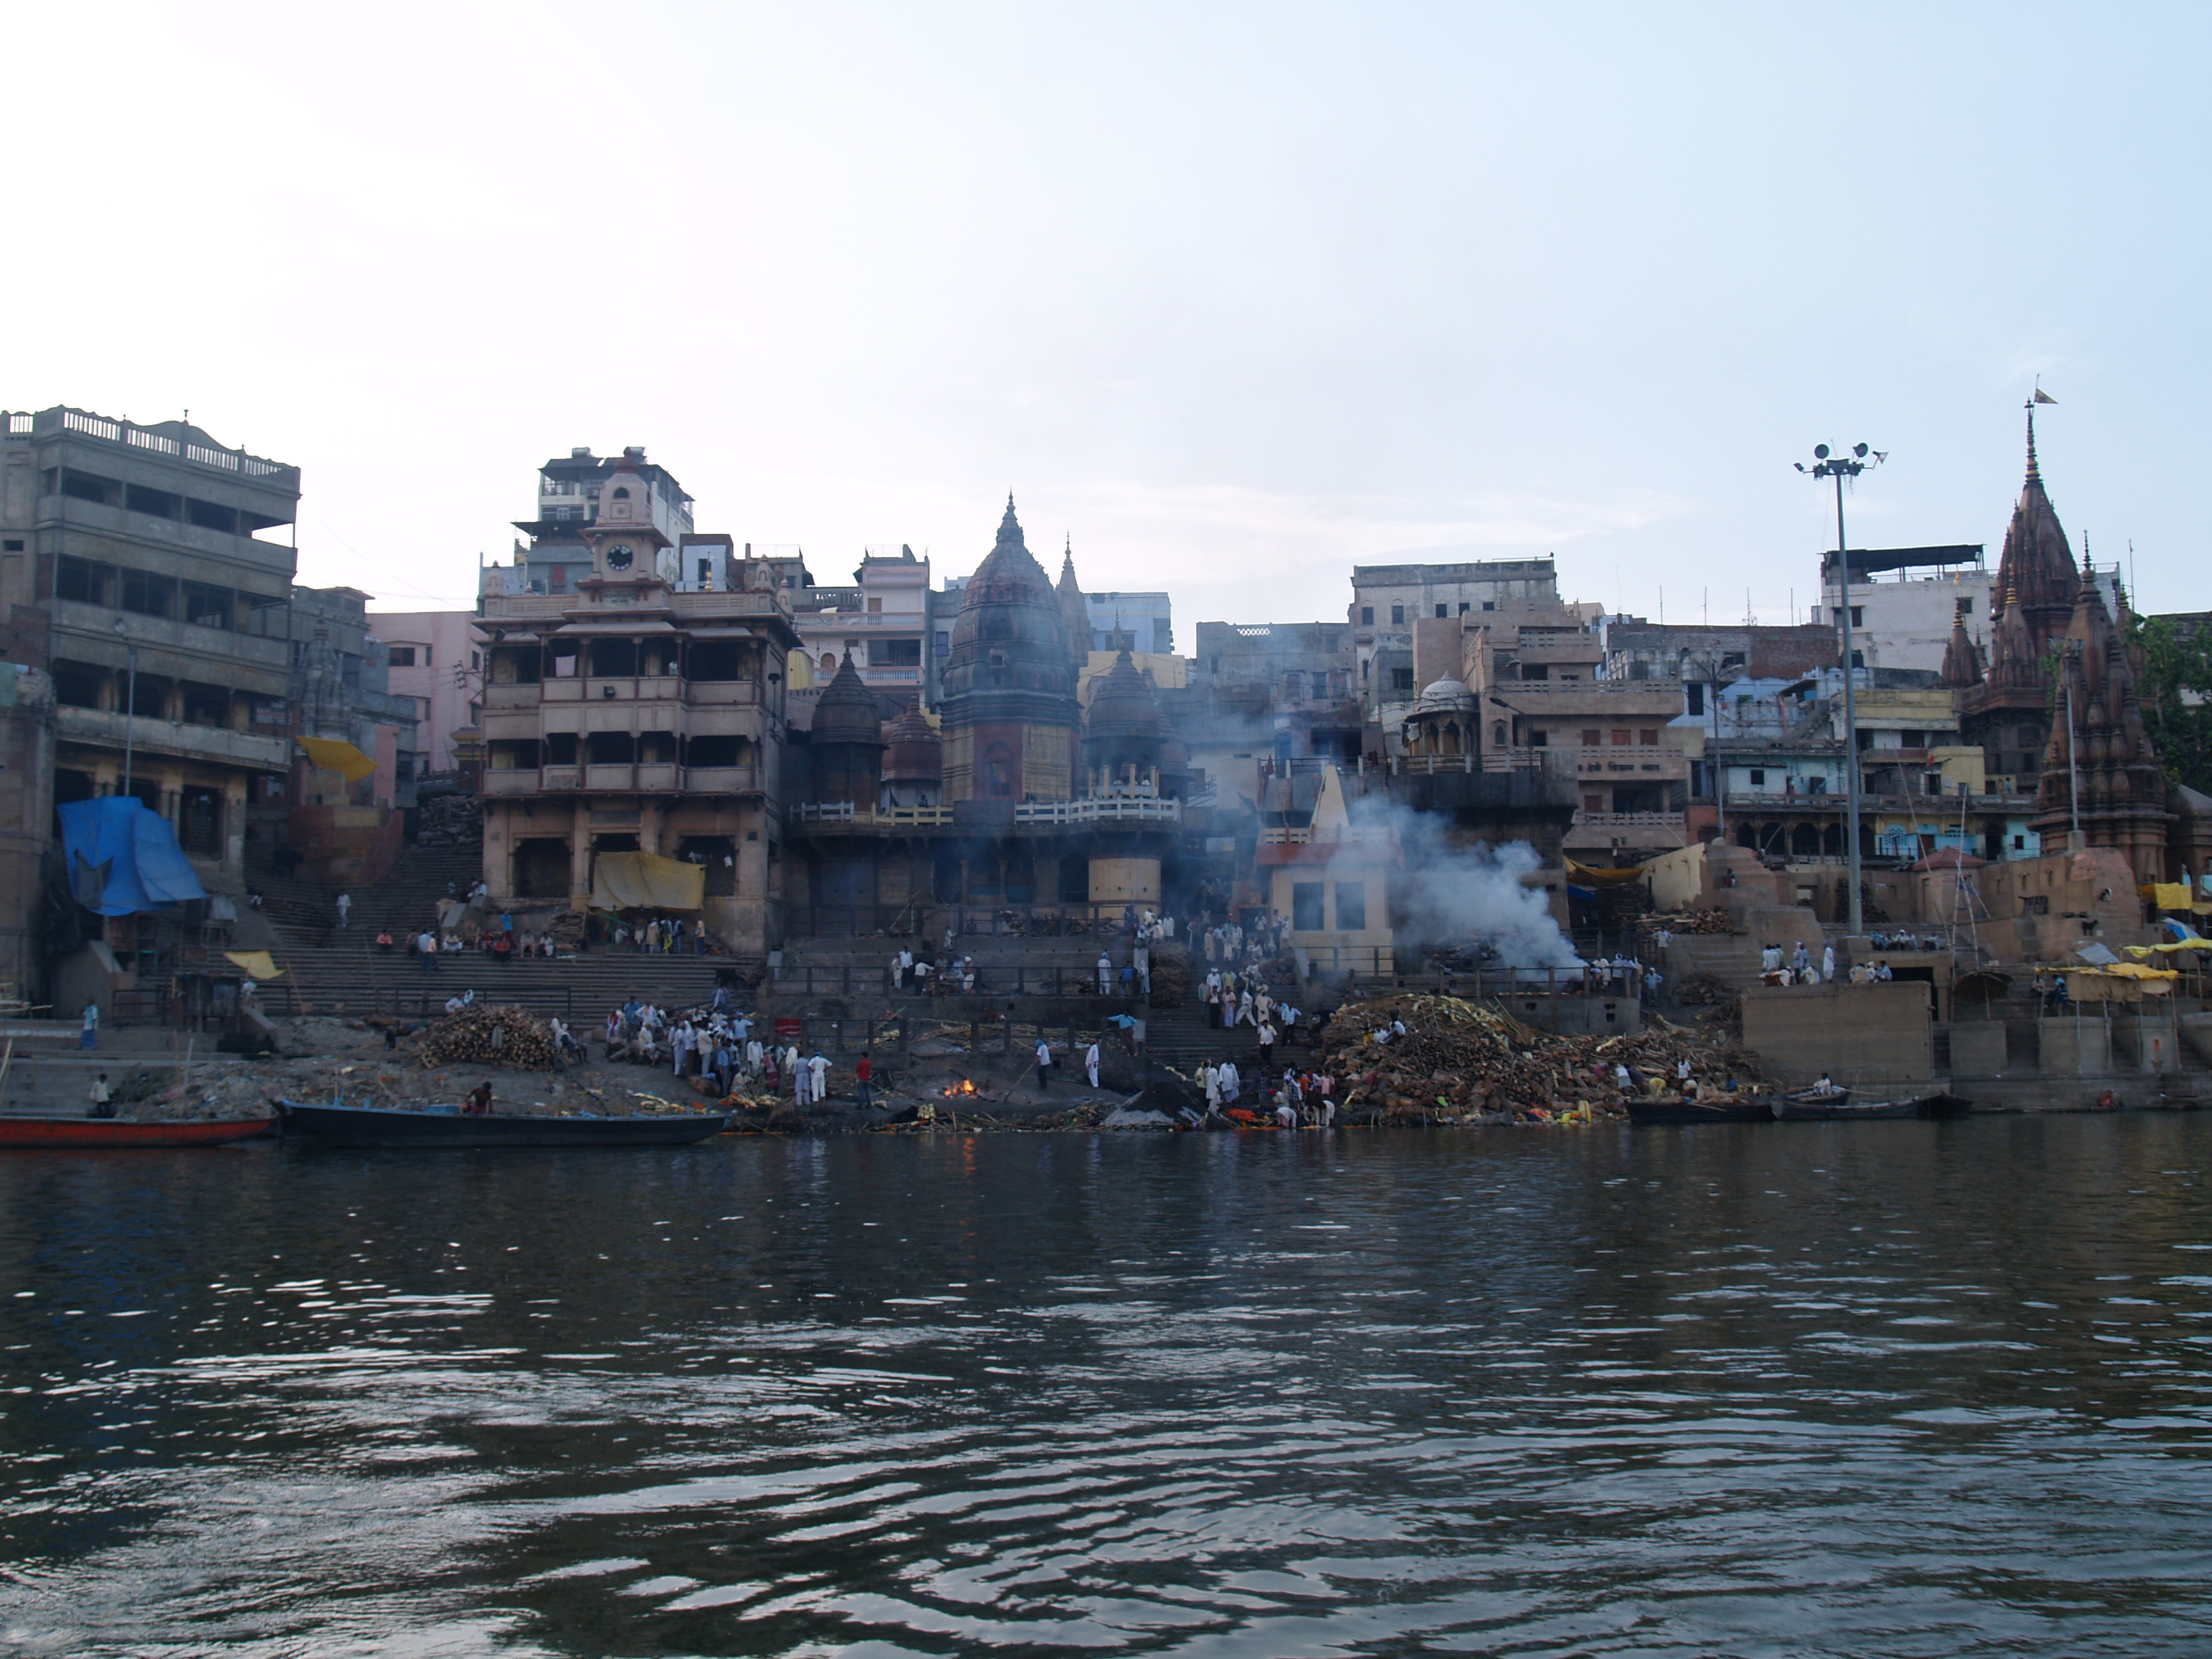 Book talks of reimagining, rejuvenating Ganga